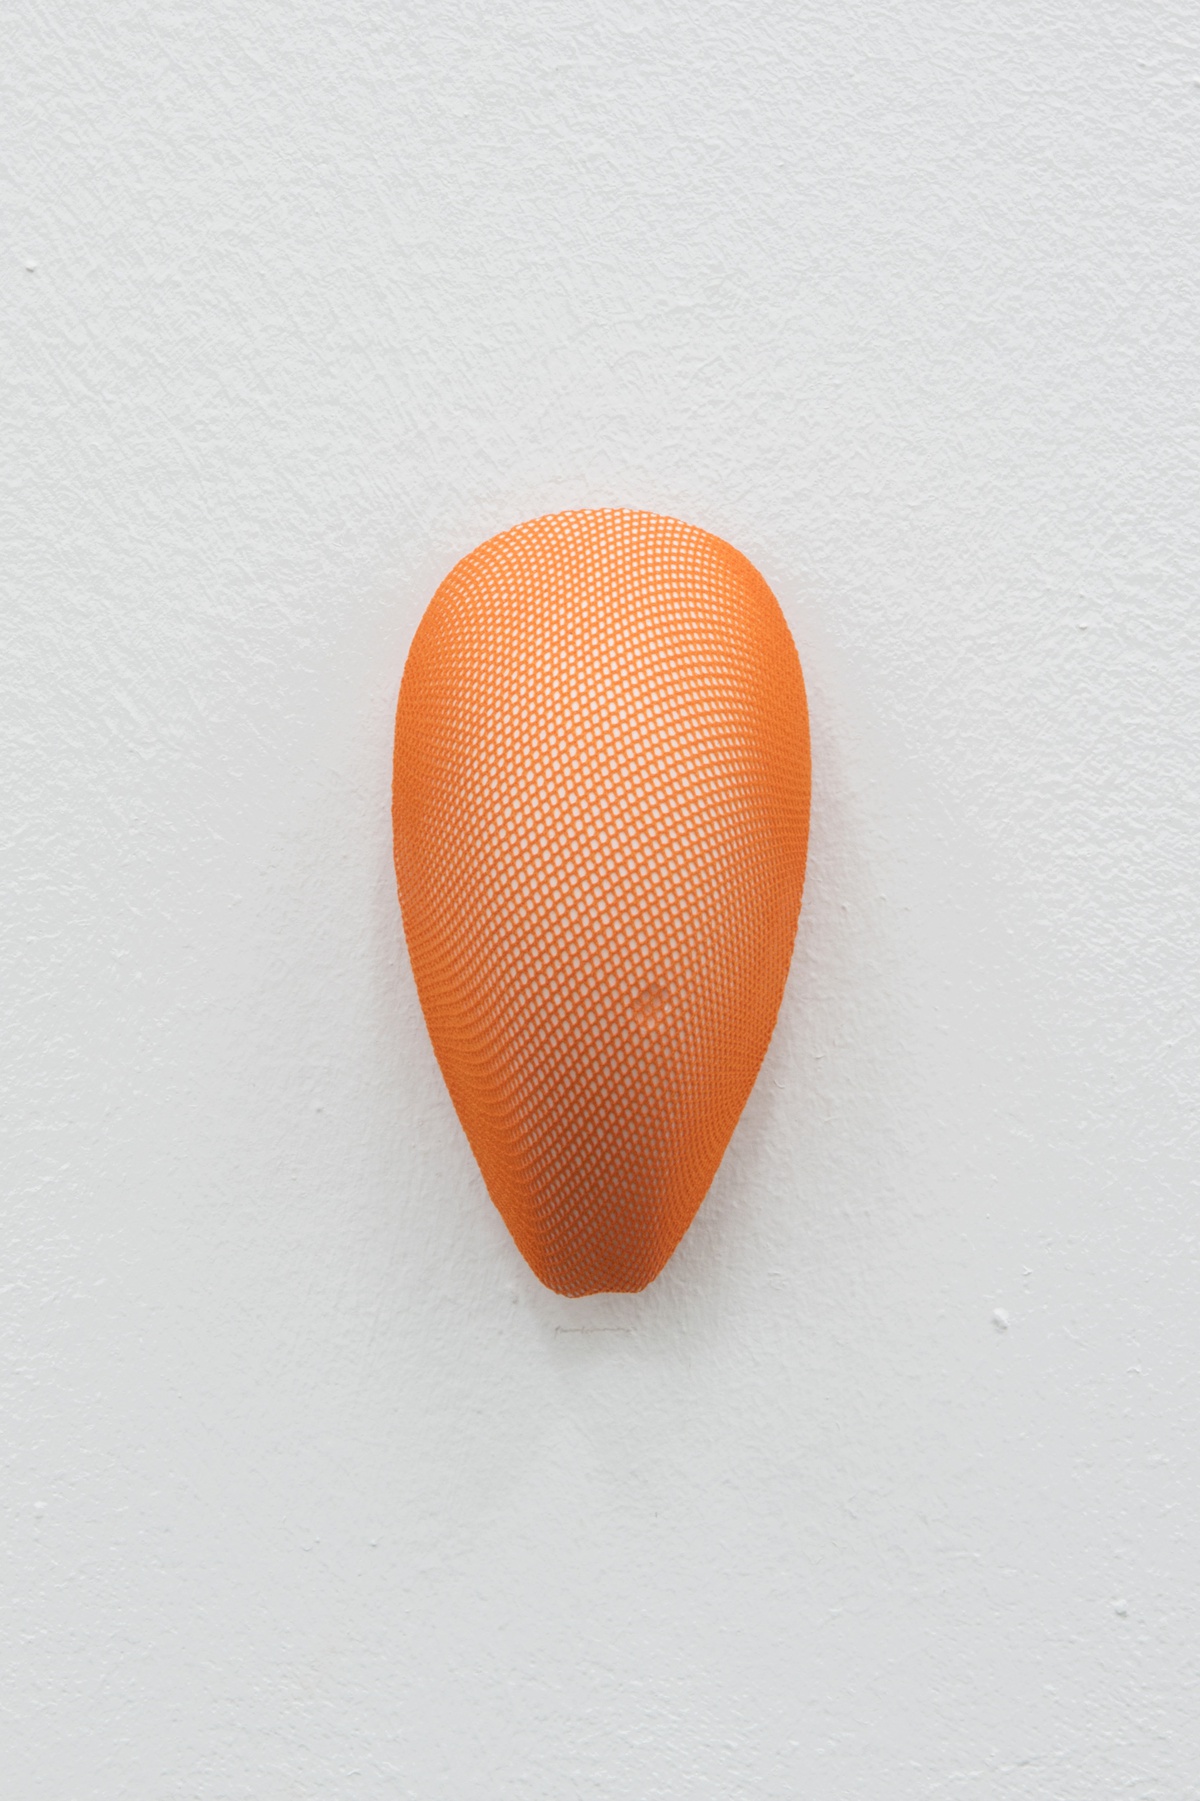 Daphne Ahlers, Orange pill, 2019plaster, spraypaint, mixed media12 x 6 cm